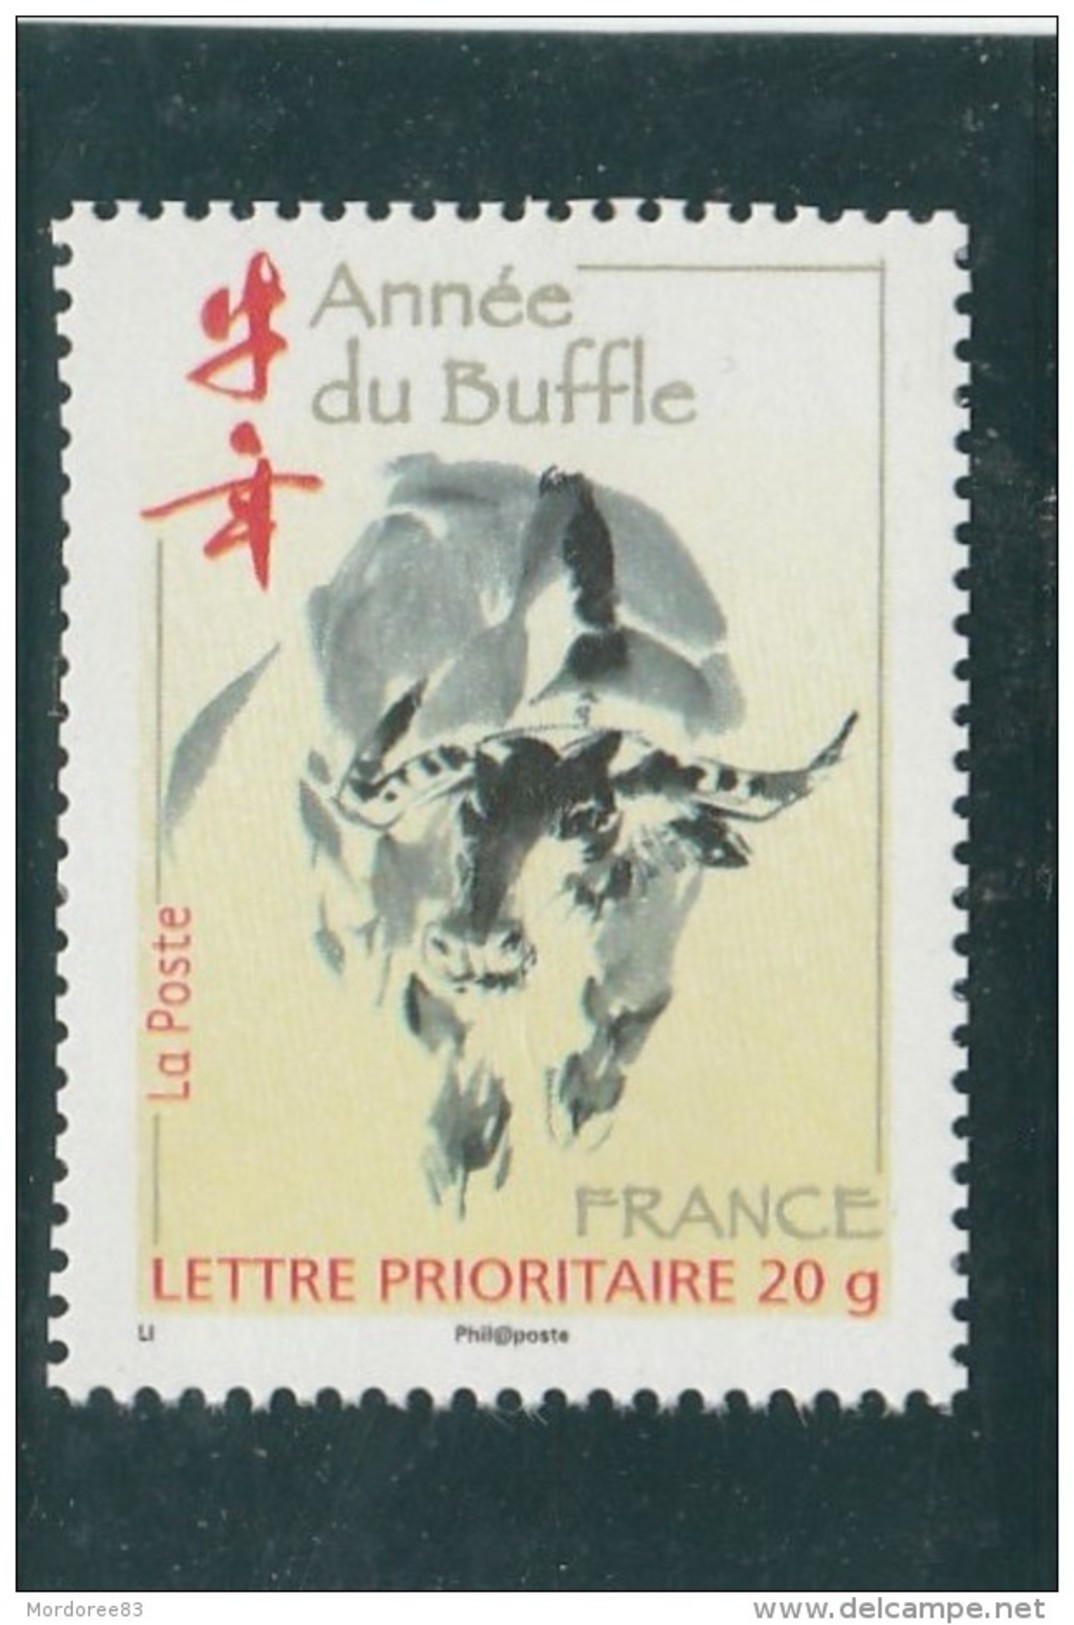 FRANCE 2009 ANNEE LUNAIRE DU BUFLE NEUF** YT 4325 - Unused Stamps